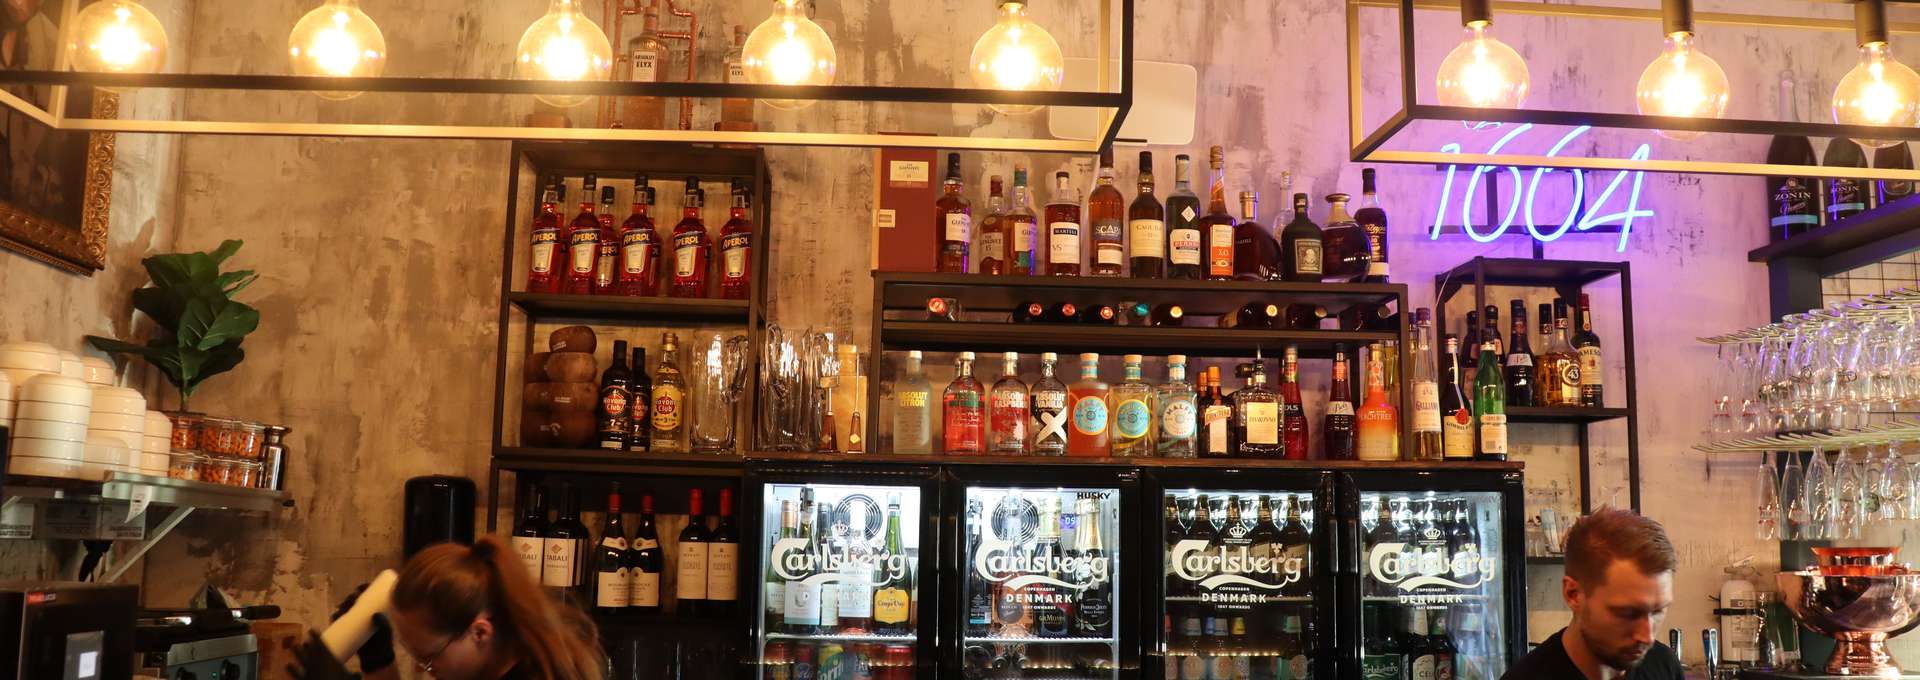 Bottles of different liquor in a bar